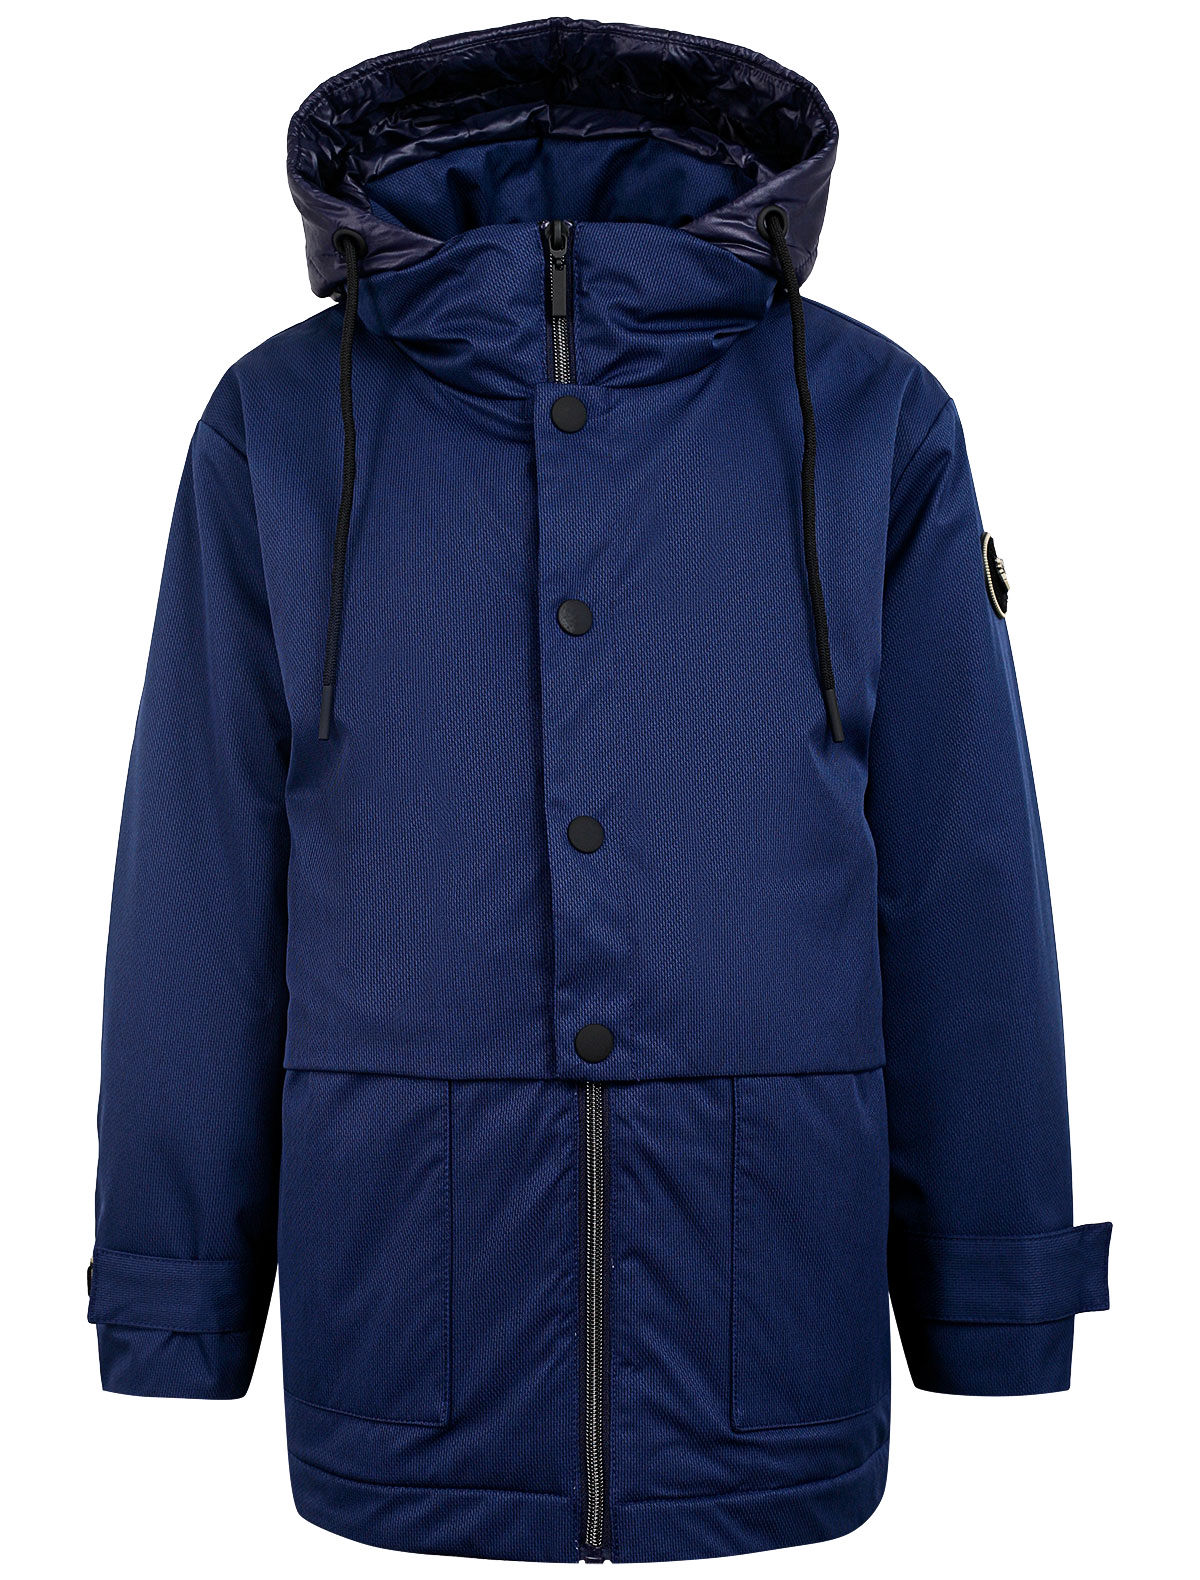 Куртка SILVER SPOON 2327564, цвет синий, размер 8 1074519180170 - фото 1